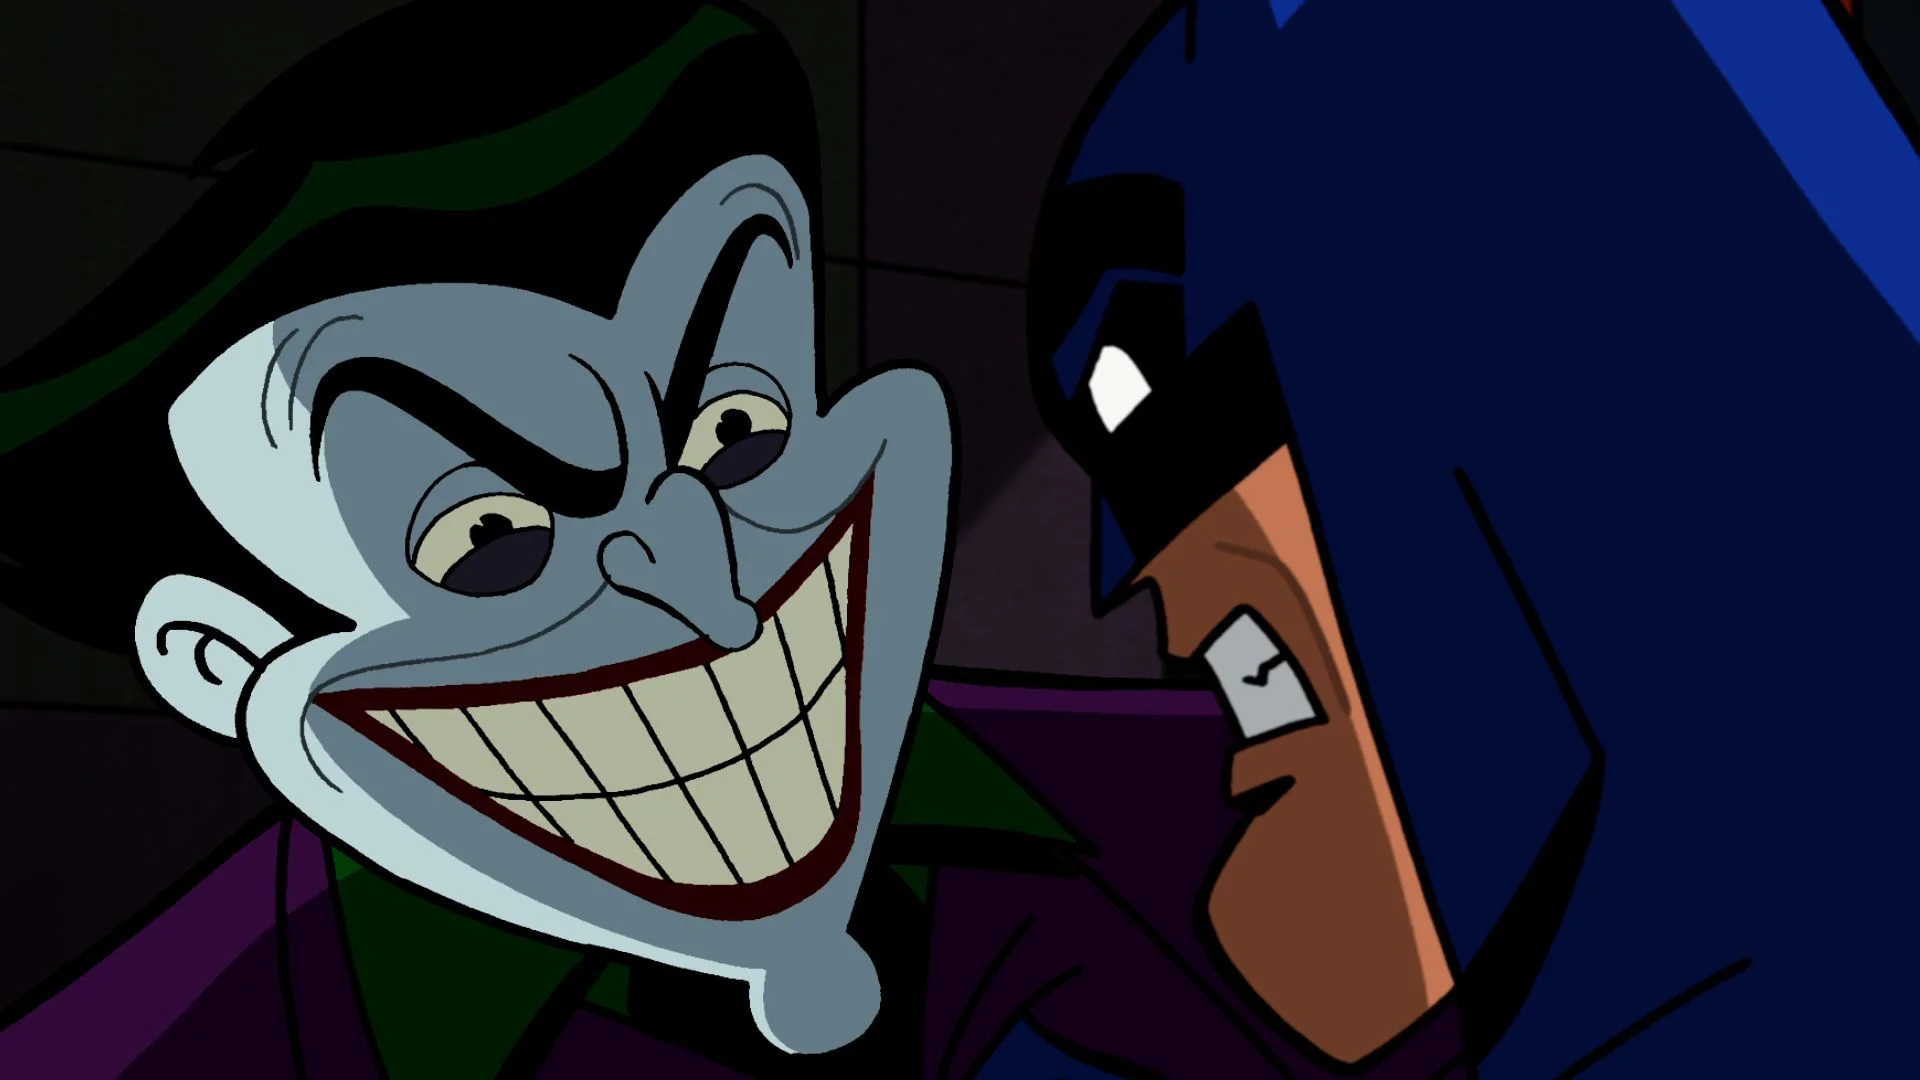 На съемках «Джокера» с Хоакином Фениксом заметили намек на Бэтмена. Но разве это возможно? - фото 1